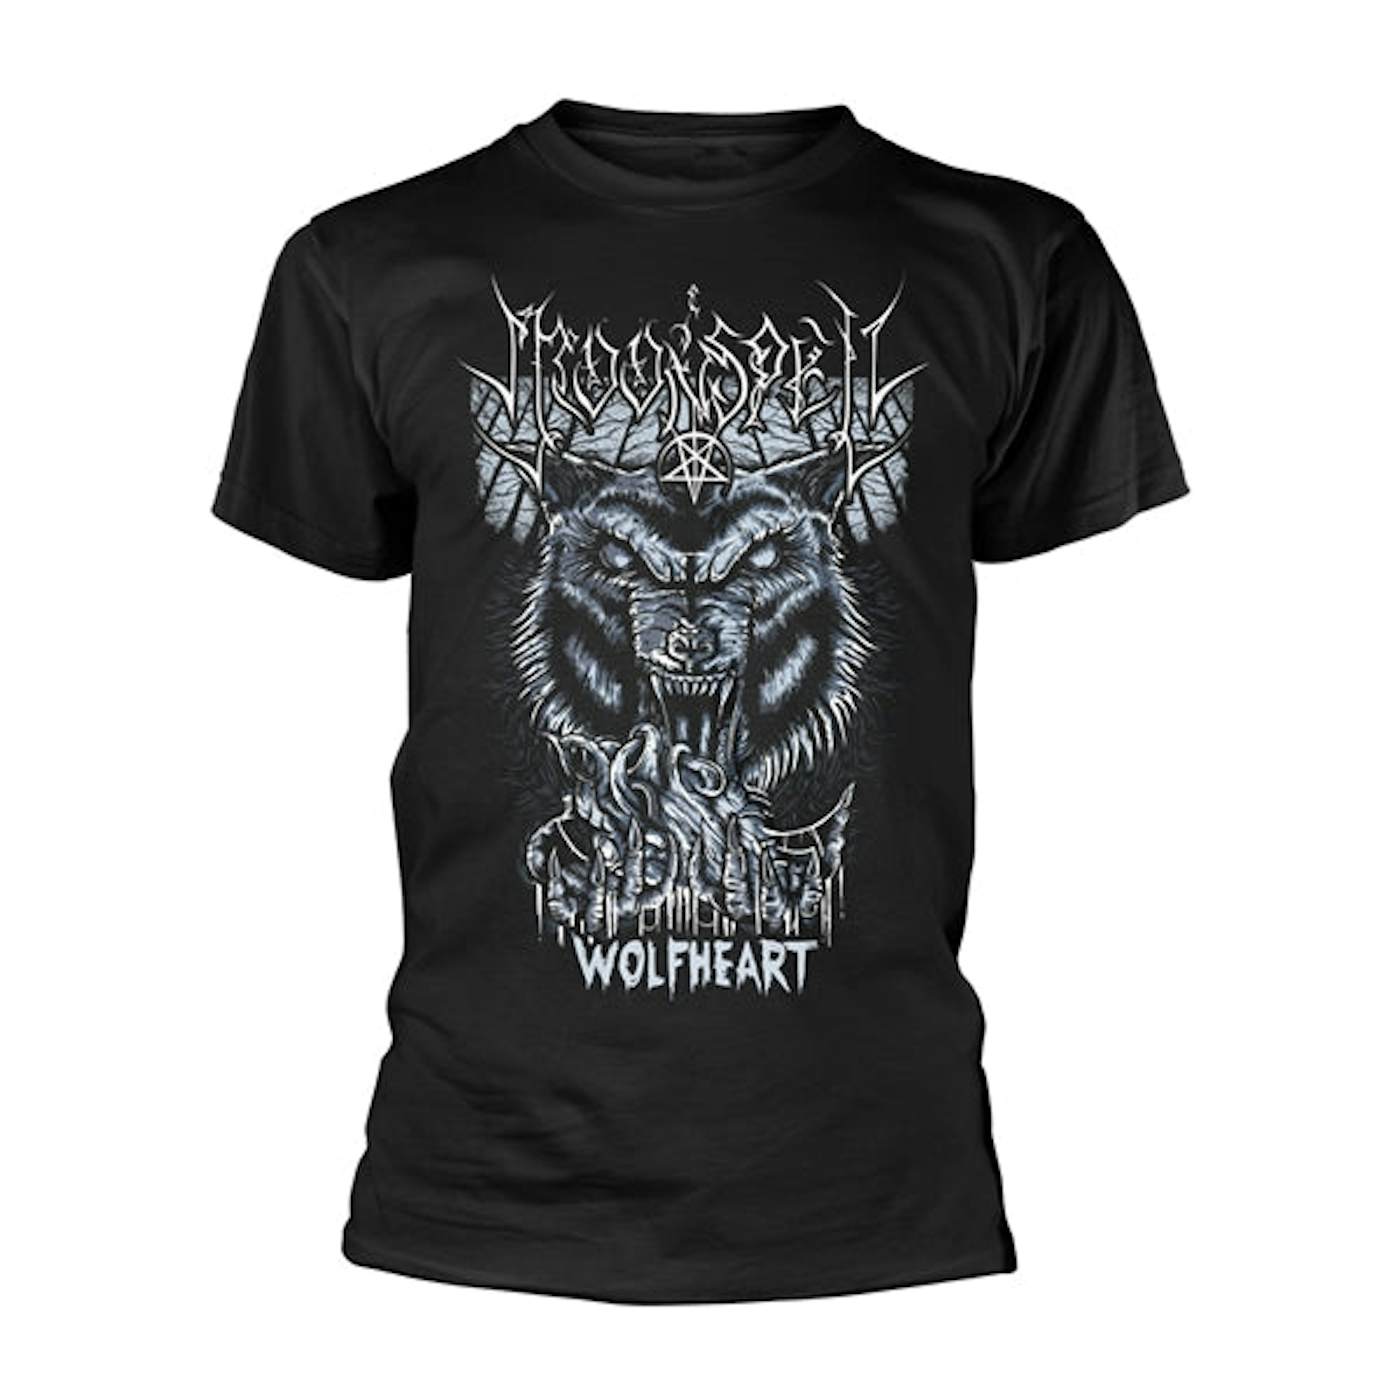 Moonspell T Shirt - Wolfheart